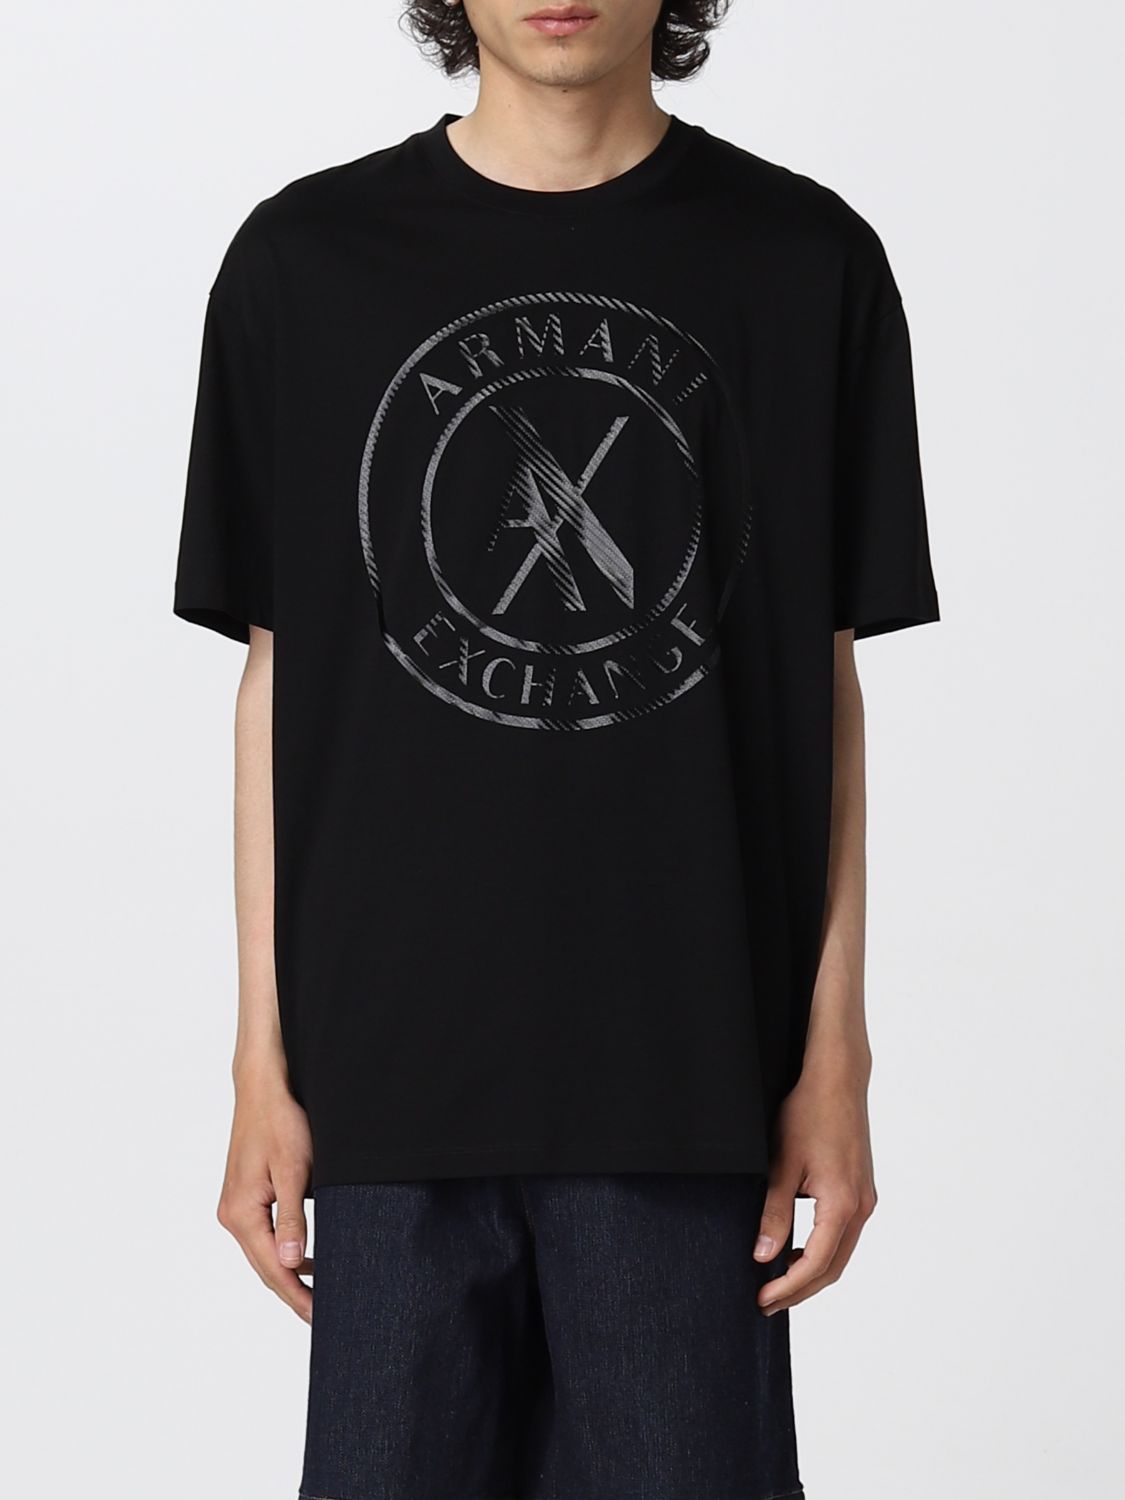 ARMANI EXCHANGE: cotton t-shirt with logo - Black | Armani Exchange t ...